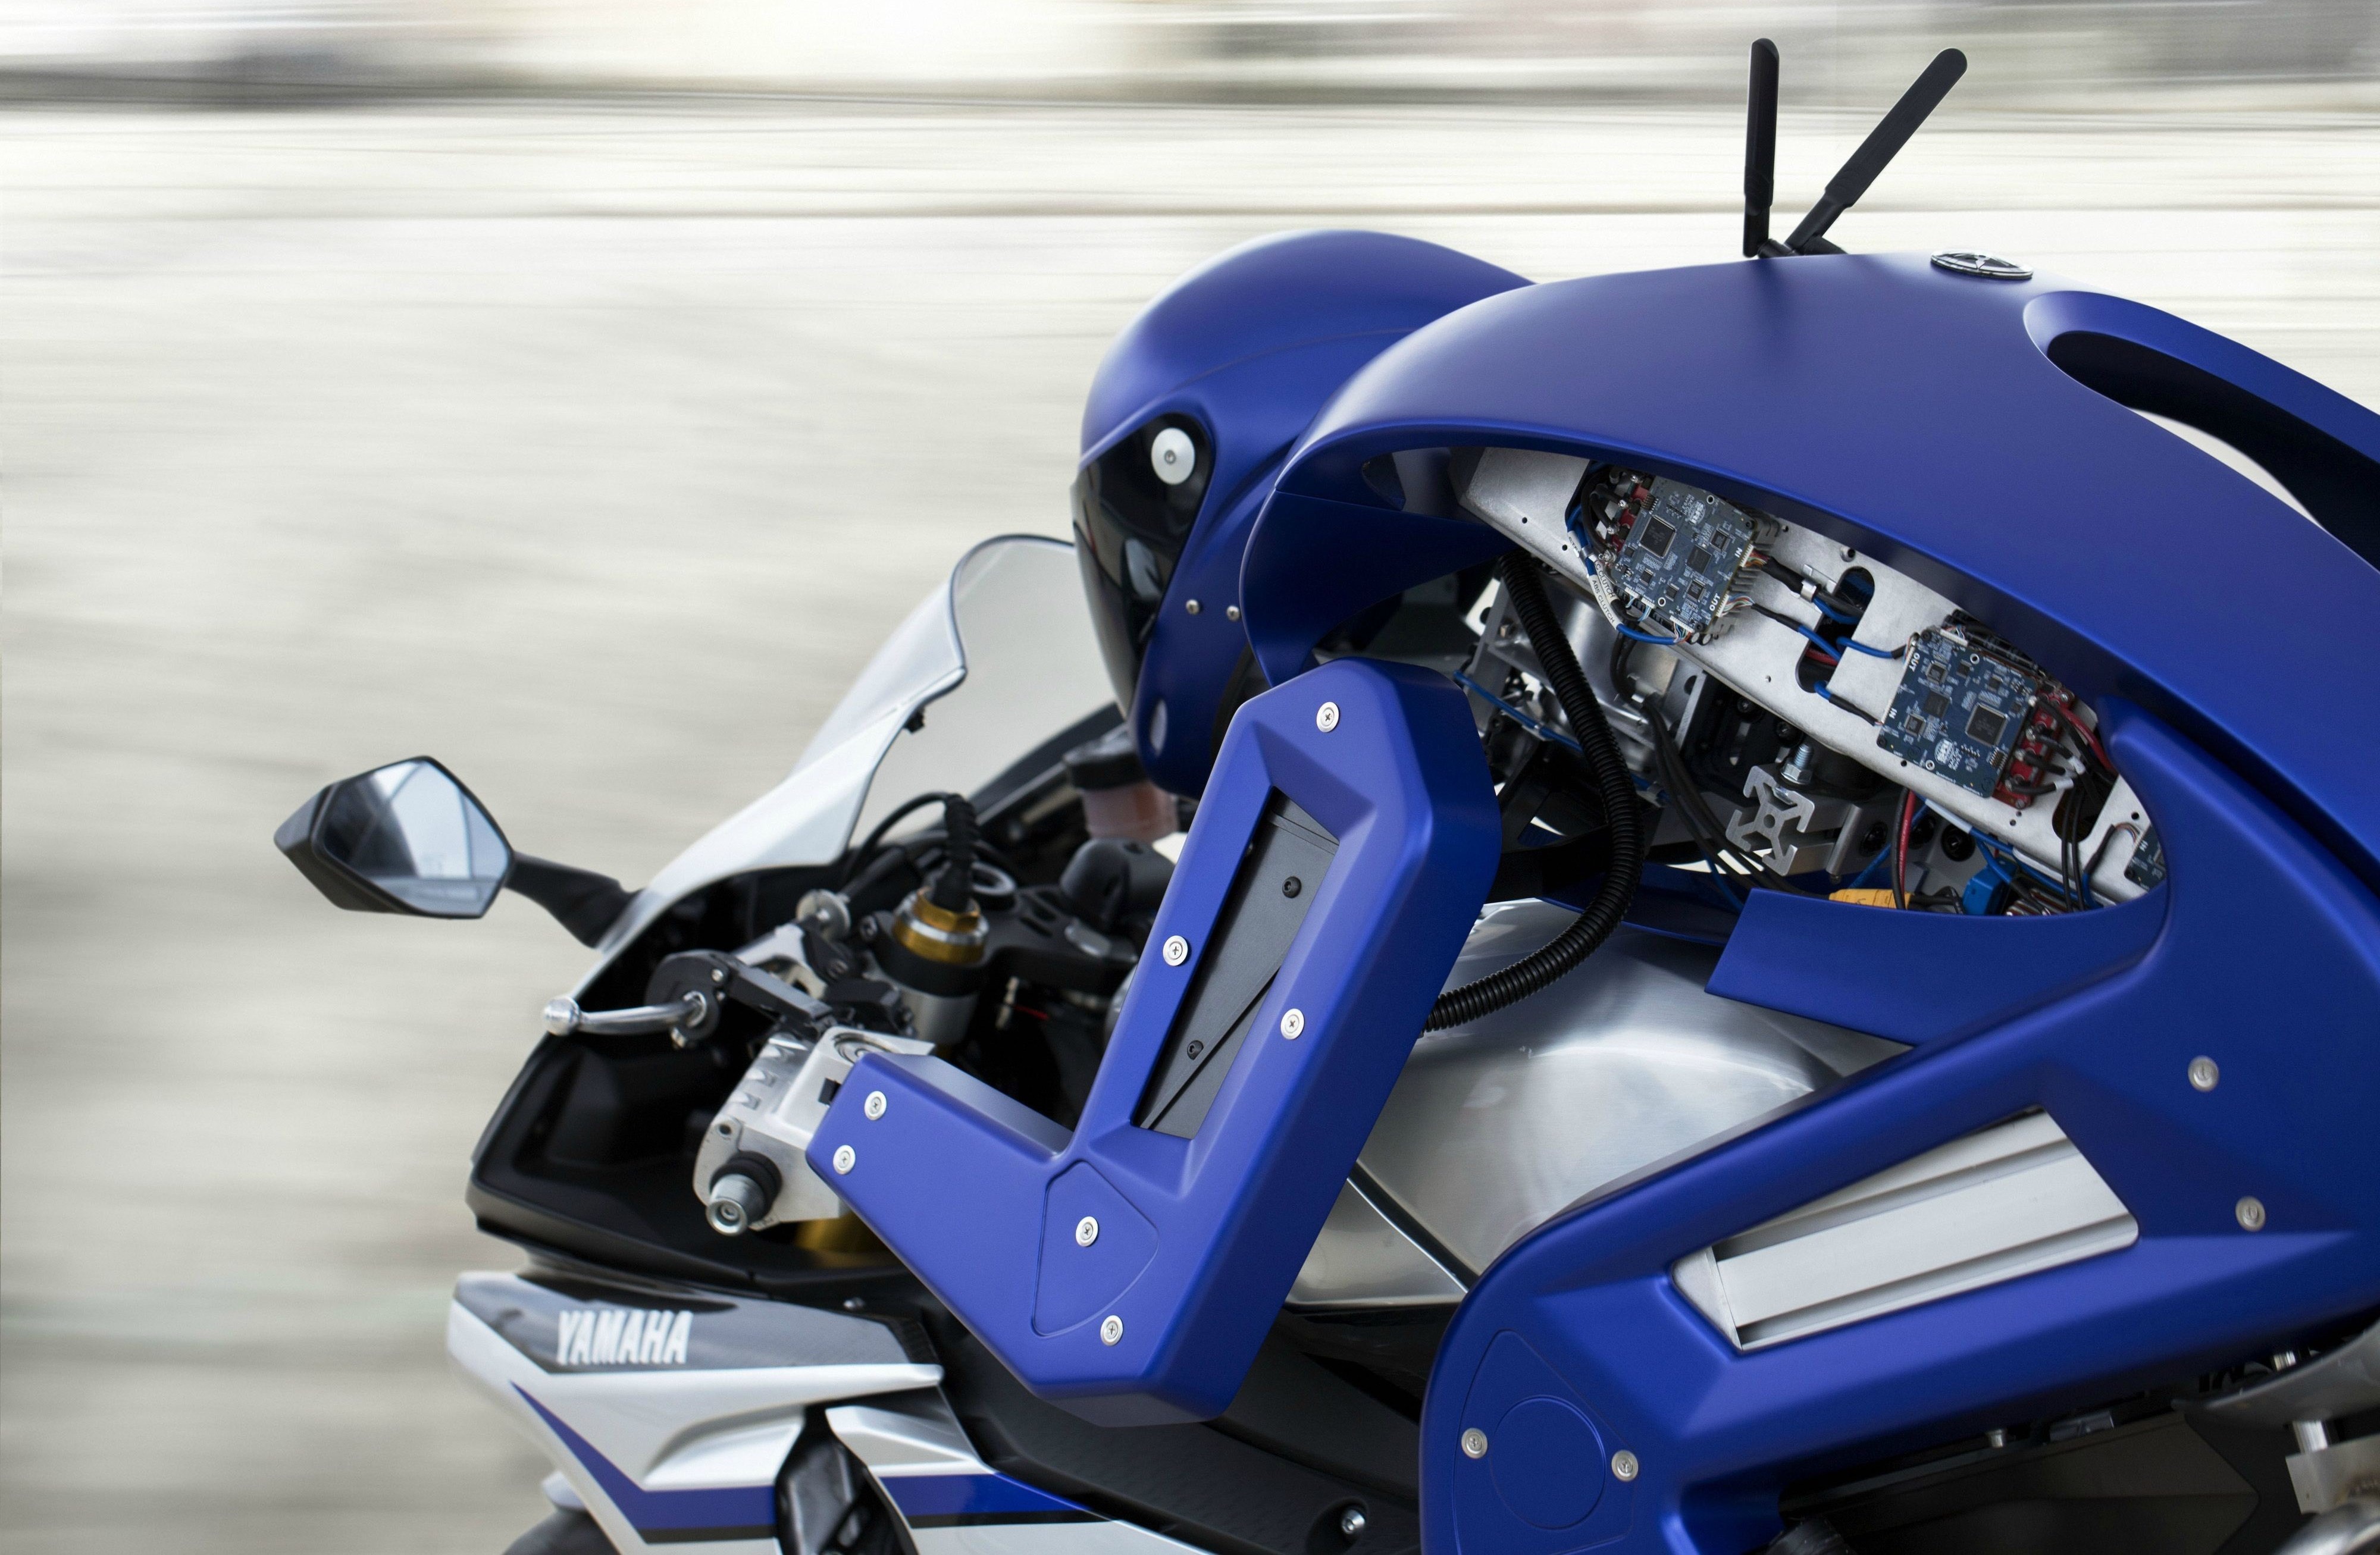 General 4000x2614 Yamaha motorcycle machine robot technology vehicle Japanese motorcycles